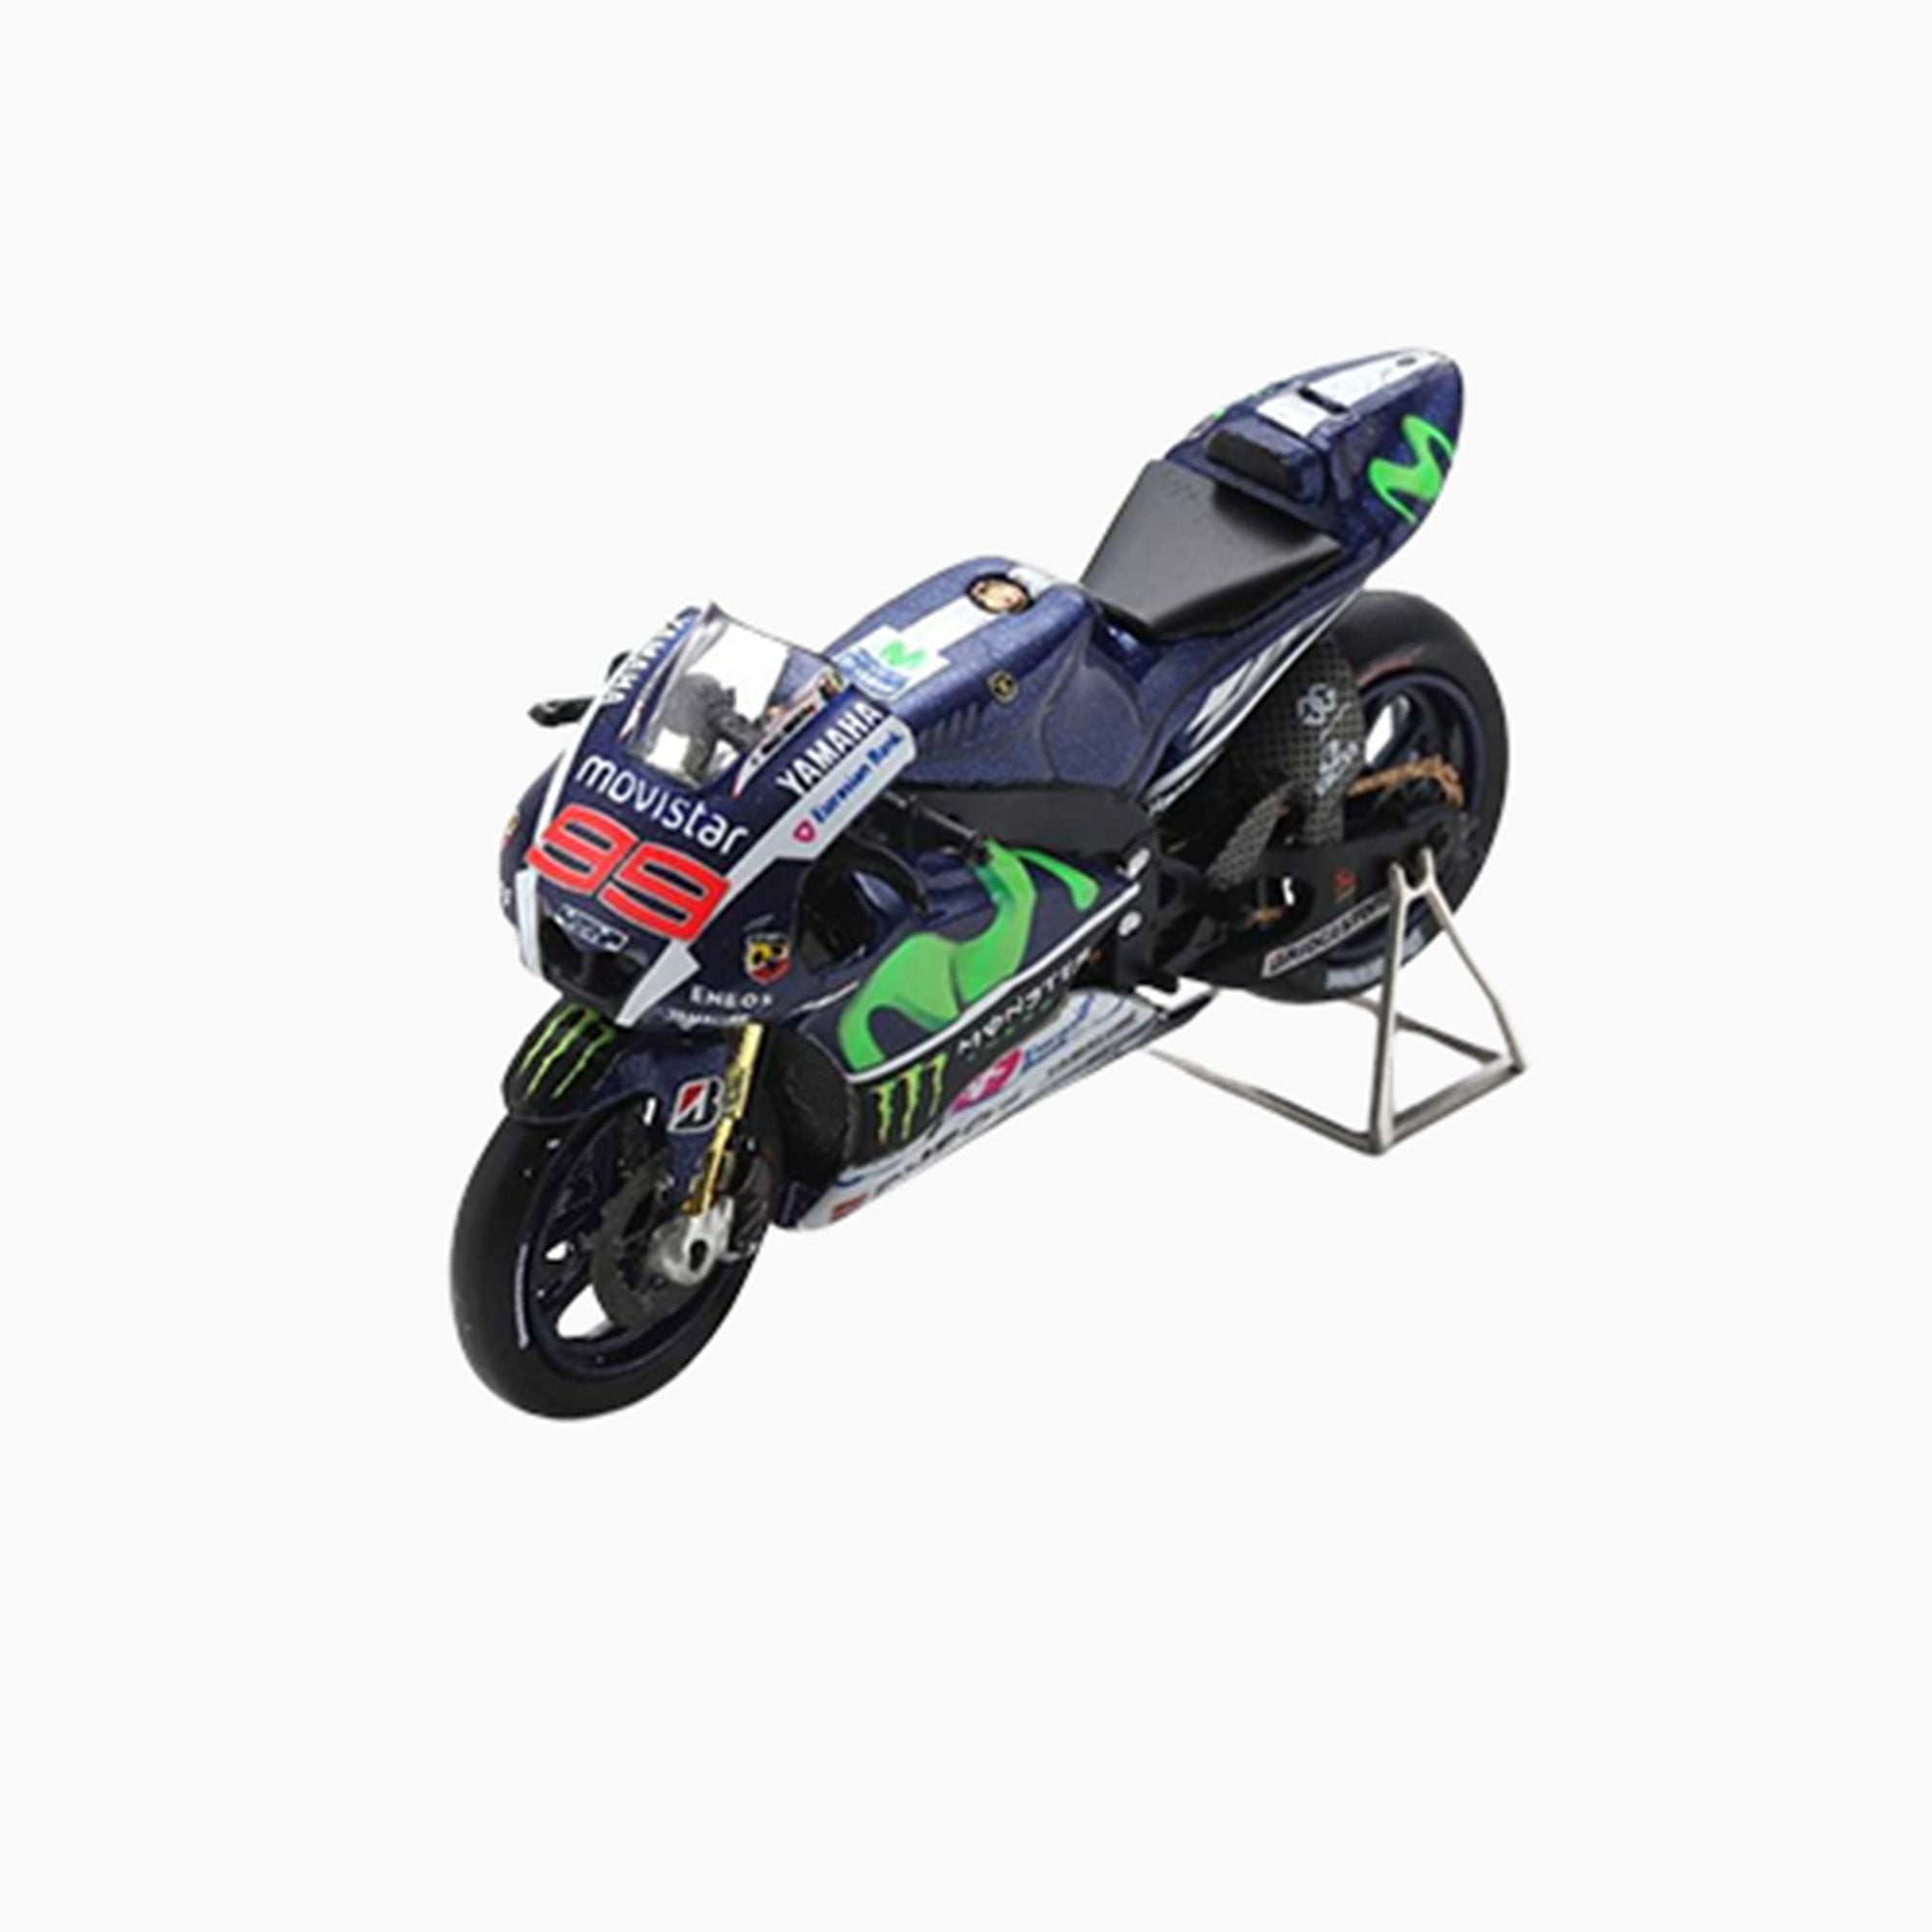 Yamaha YZR M1 #99 - Movistar Yamaha MotoGP Winner Spanish GP - Valencia - World Champion 2015 | 1:43 Scale Model-1:43 Scale Model-Spark Models-gpx-store